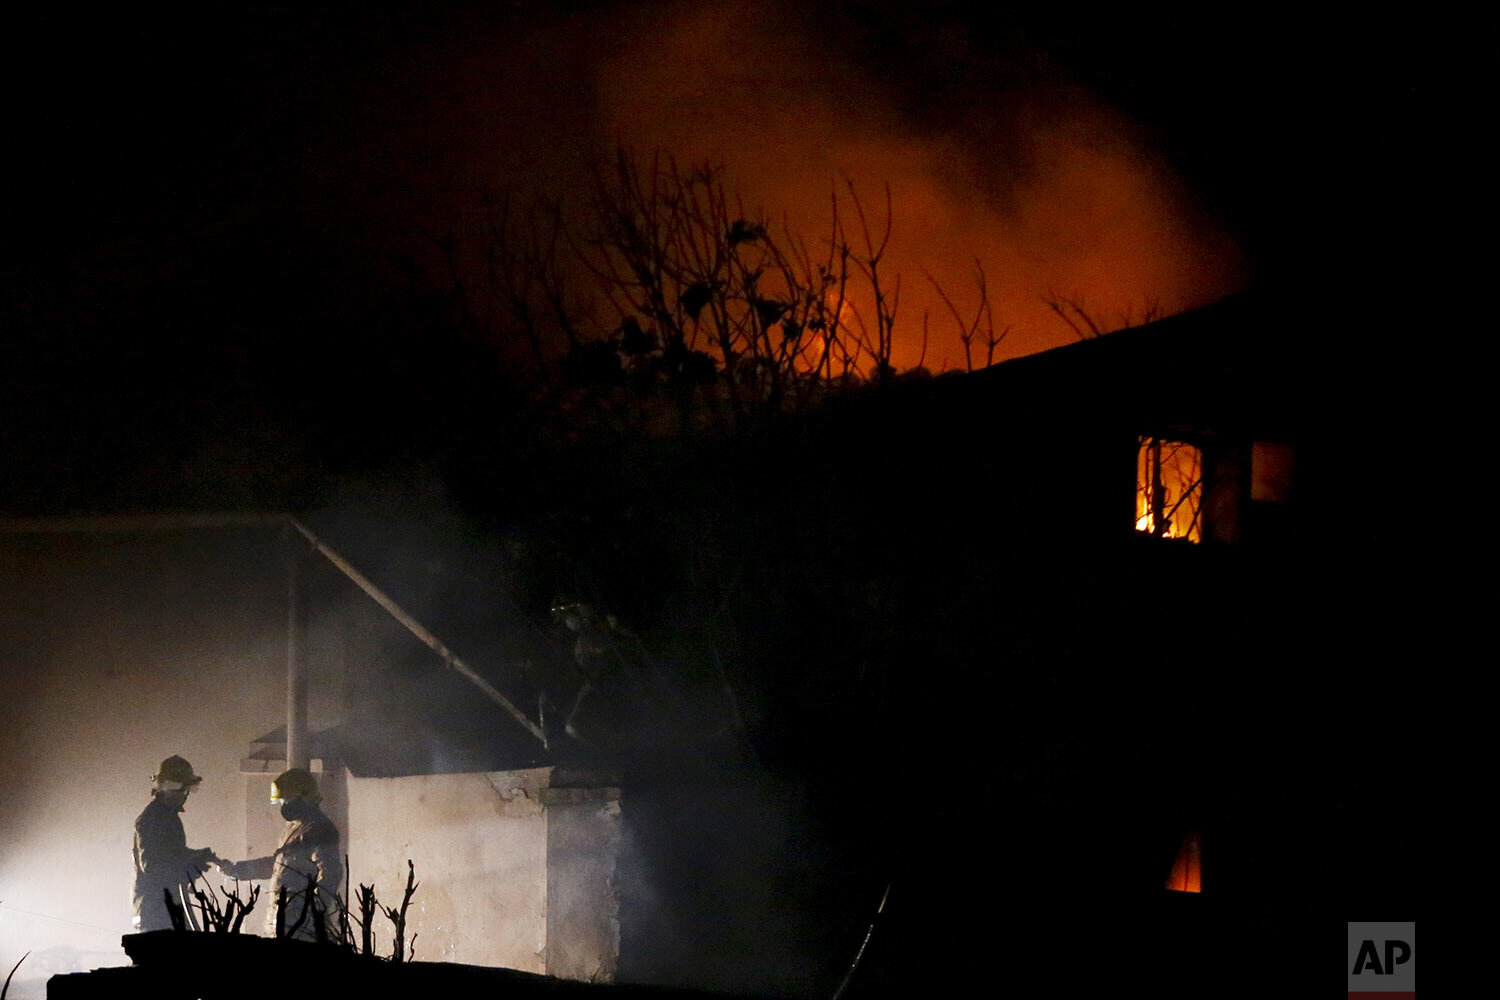  Firefighters work the scene of a fire at La Chacarita neighborhood on Christmas Eve, in Asunción, Paraguay, Friday, Dec. 25, 2020. (AP Photo/Cesar Olmedo) 